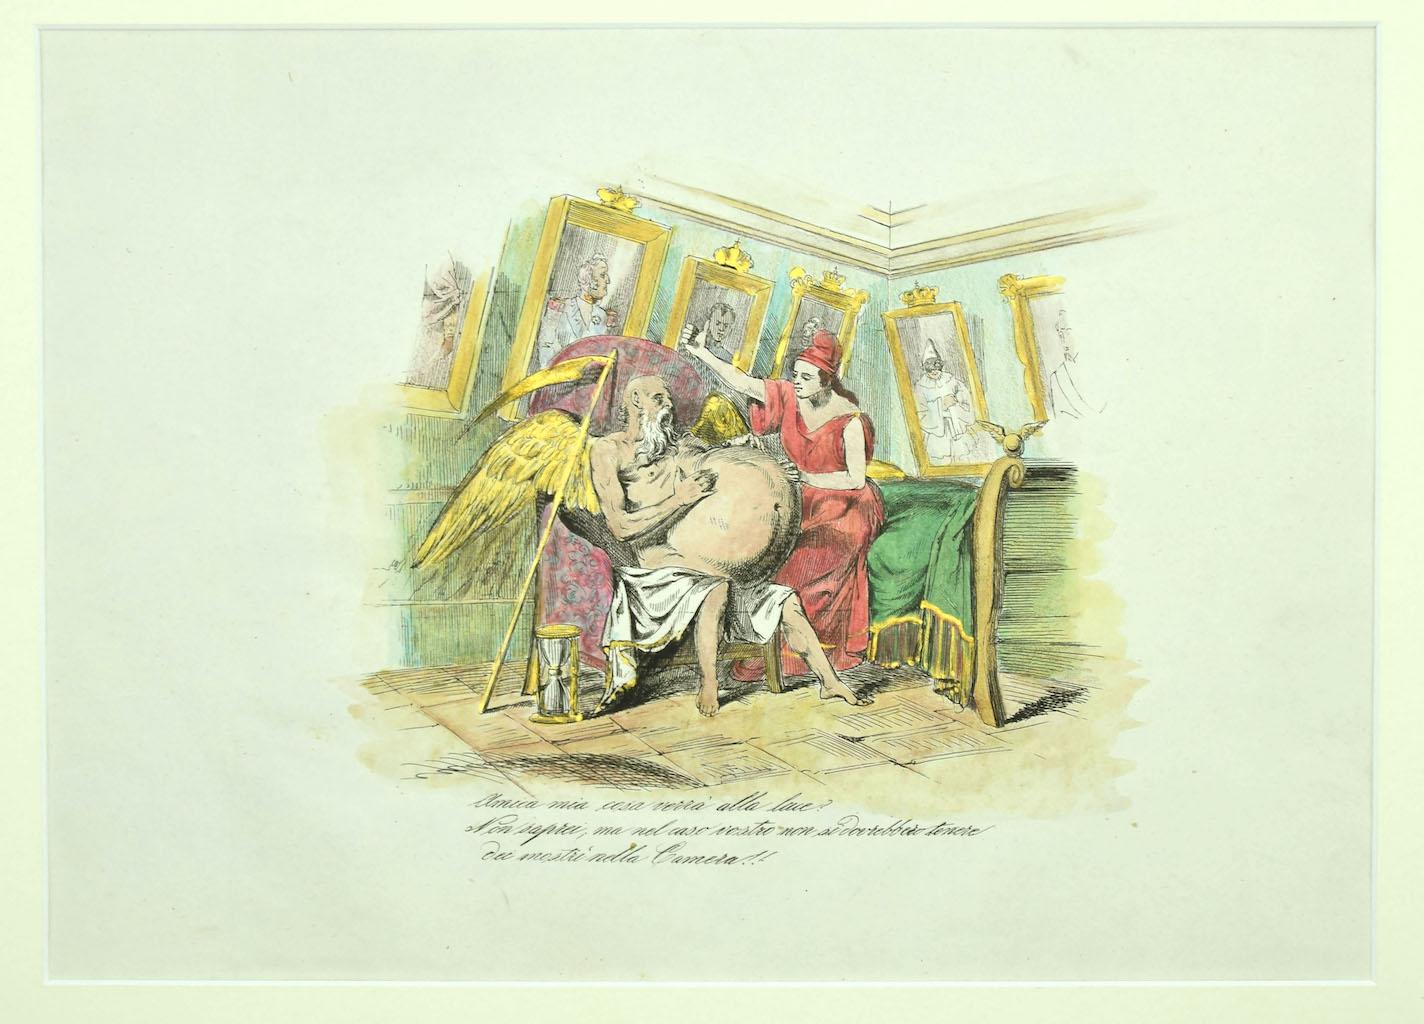 Satirical Scene - Original Lithograph Hand Watercolored - 19th Century